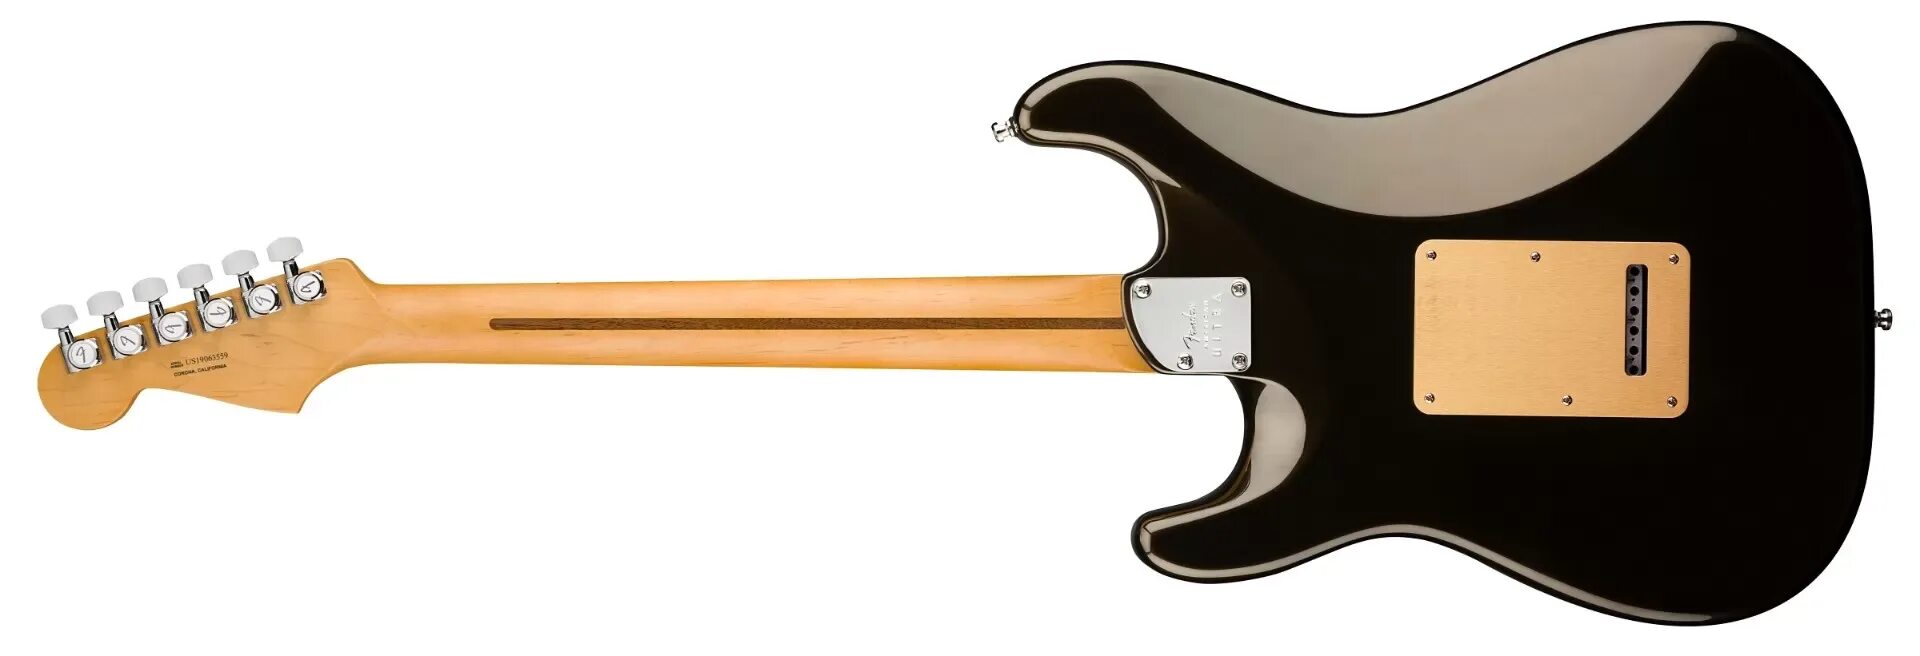 Электрогитара Fender Squier Bullet. Гитара Fender Squier Bullet Strat. Fender Squier Bullet trem BLK. Электрогитара SX SST Alder. Рейтинг электрогитар